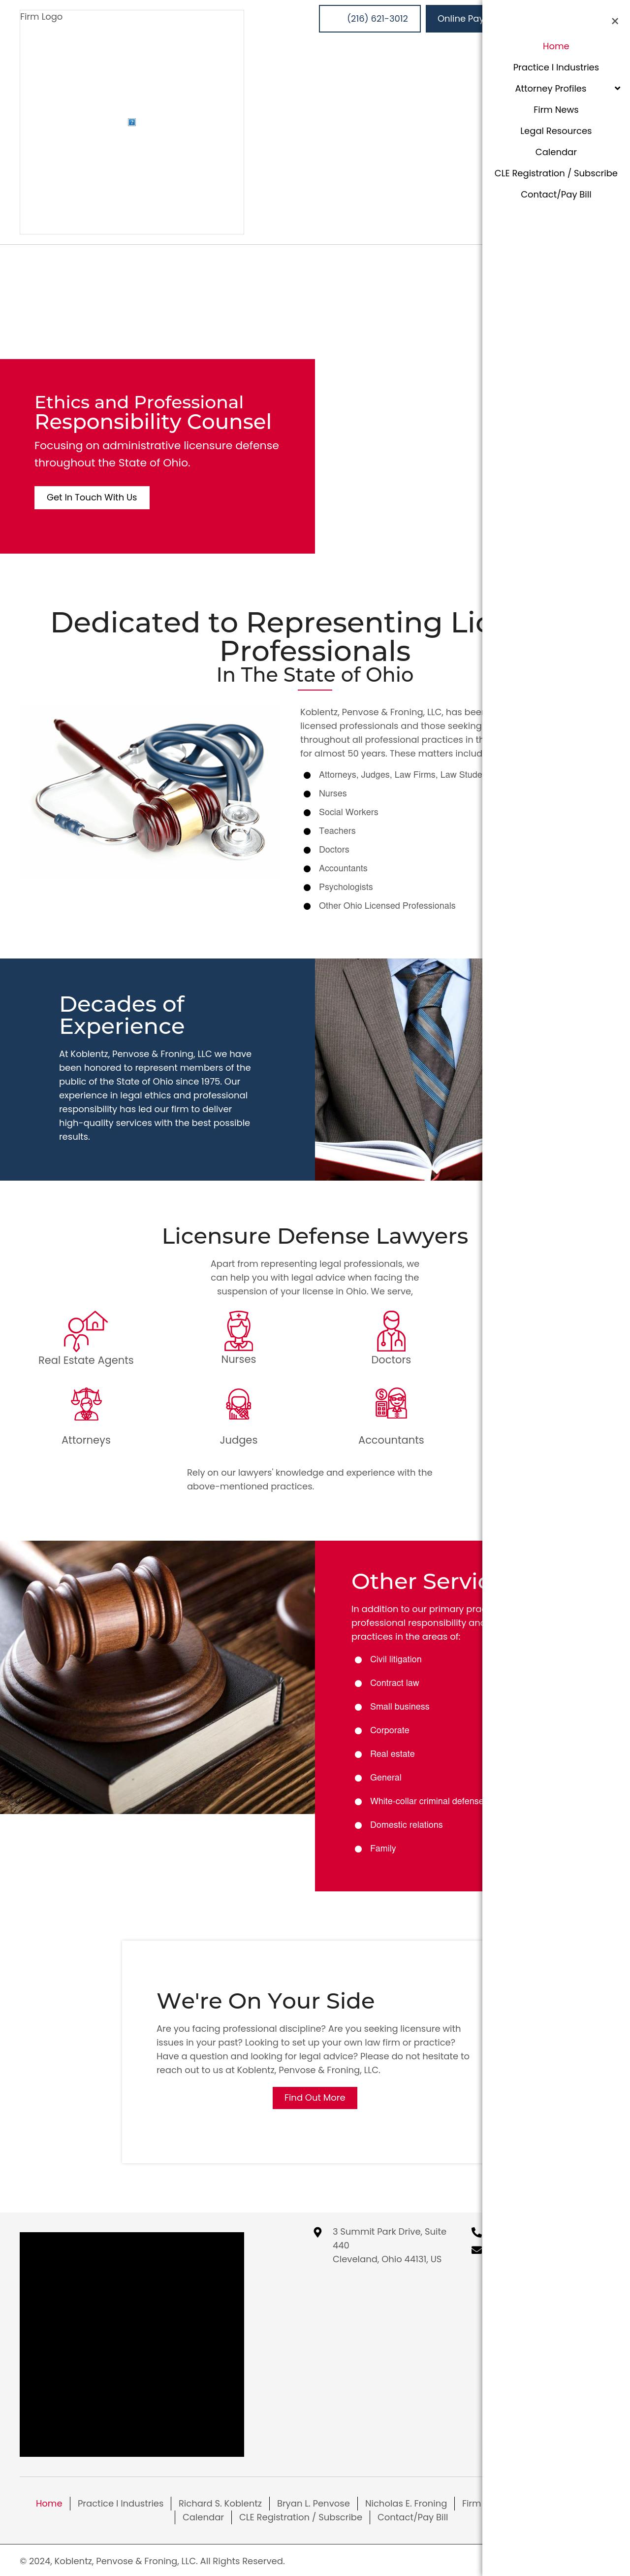 Koblentz & Penvose LLC - Cleveland OH Lawyers